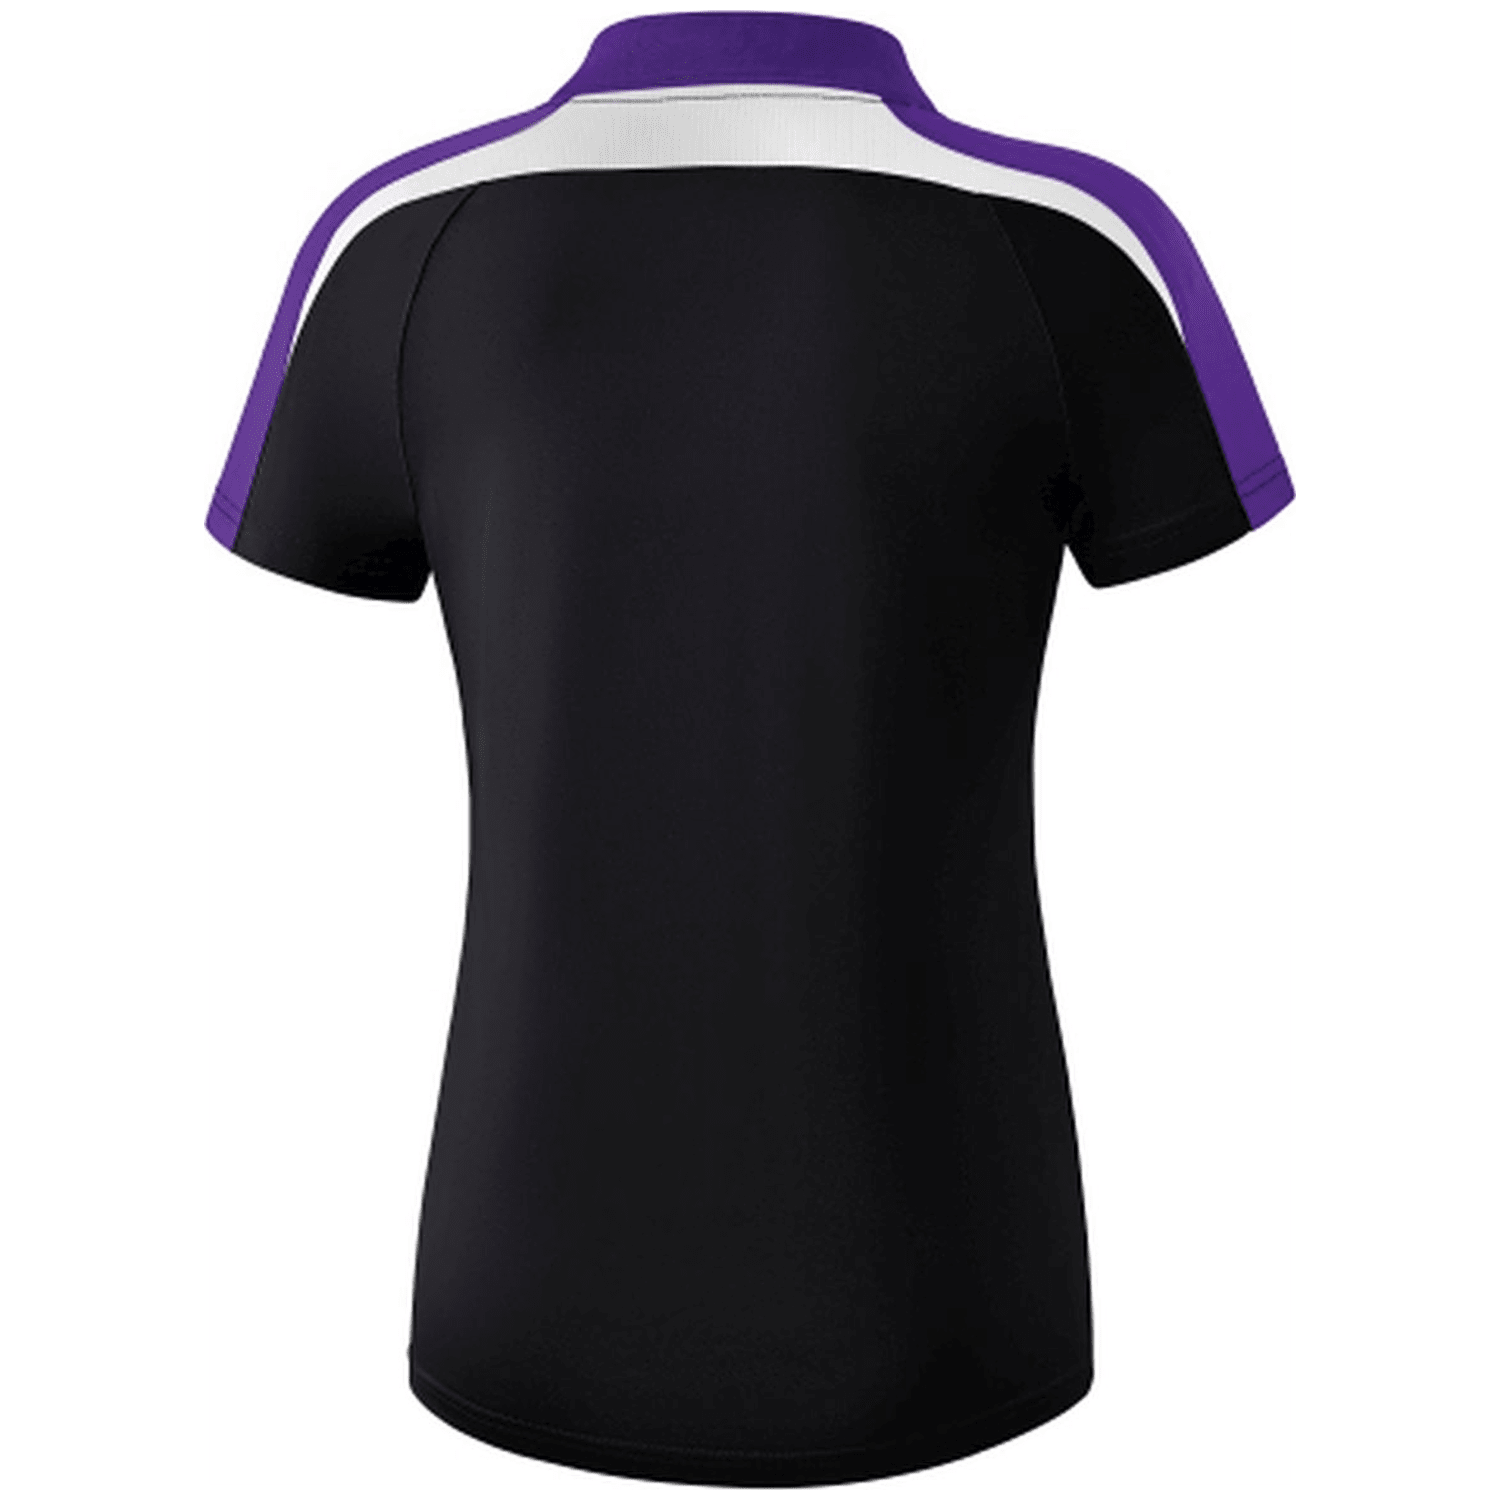 Erima Liga 2.0 Damen Poloshirt